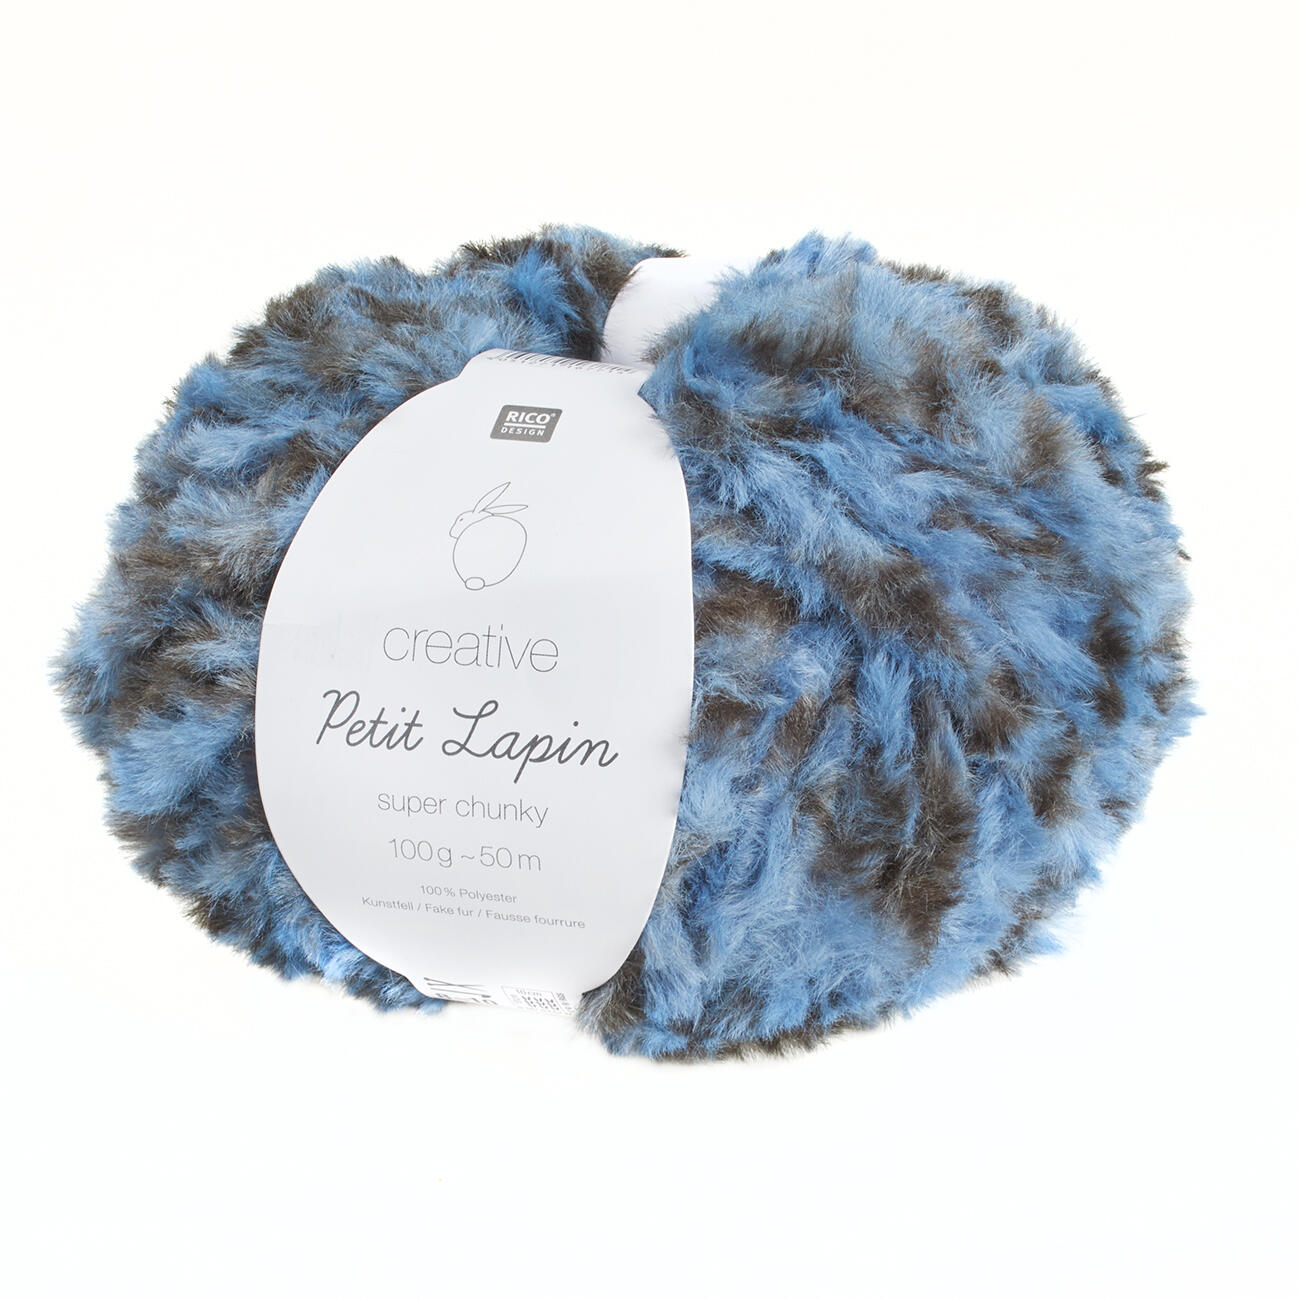 Creative Petit Lapin super chunky von Rico Design (100g/60m) 11 Blau